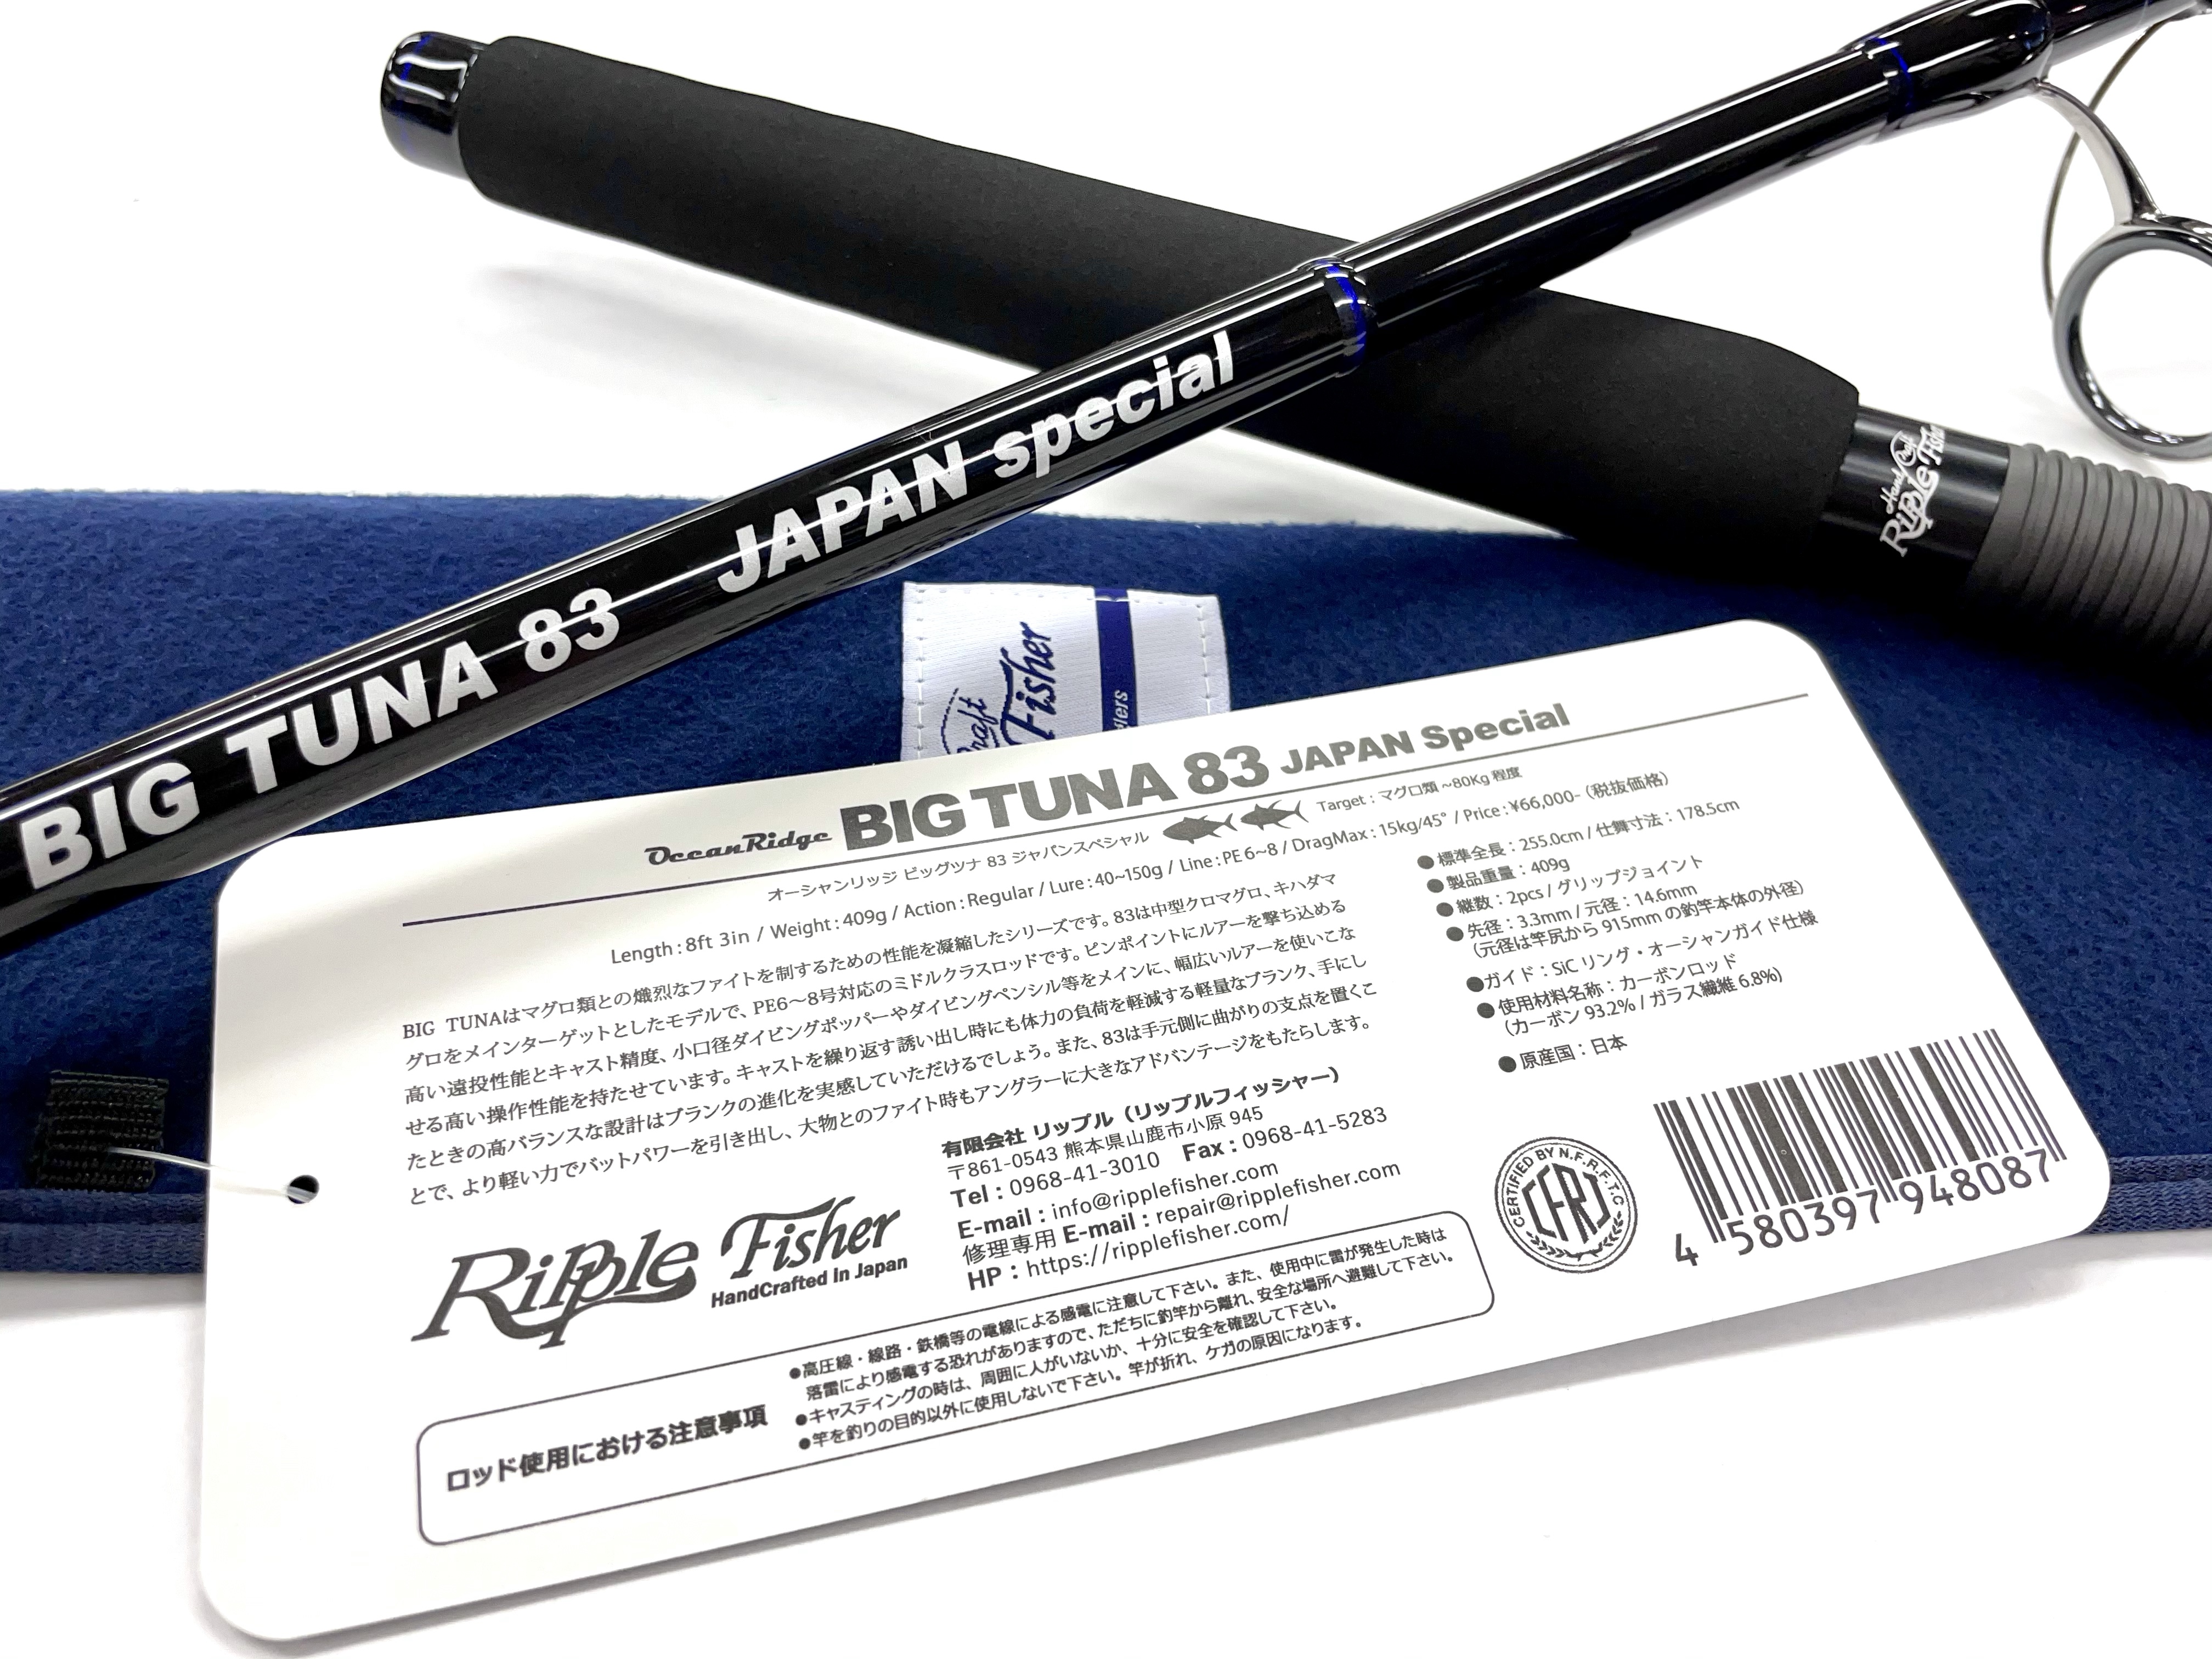 Ripple Fisher【Ocean Ridge BIG TUNA 83 JAPAN Special】 – サンスイ 